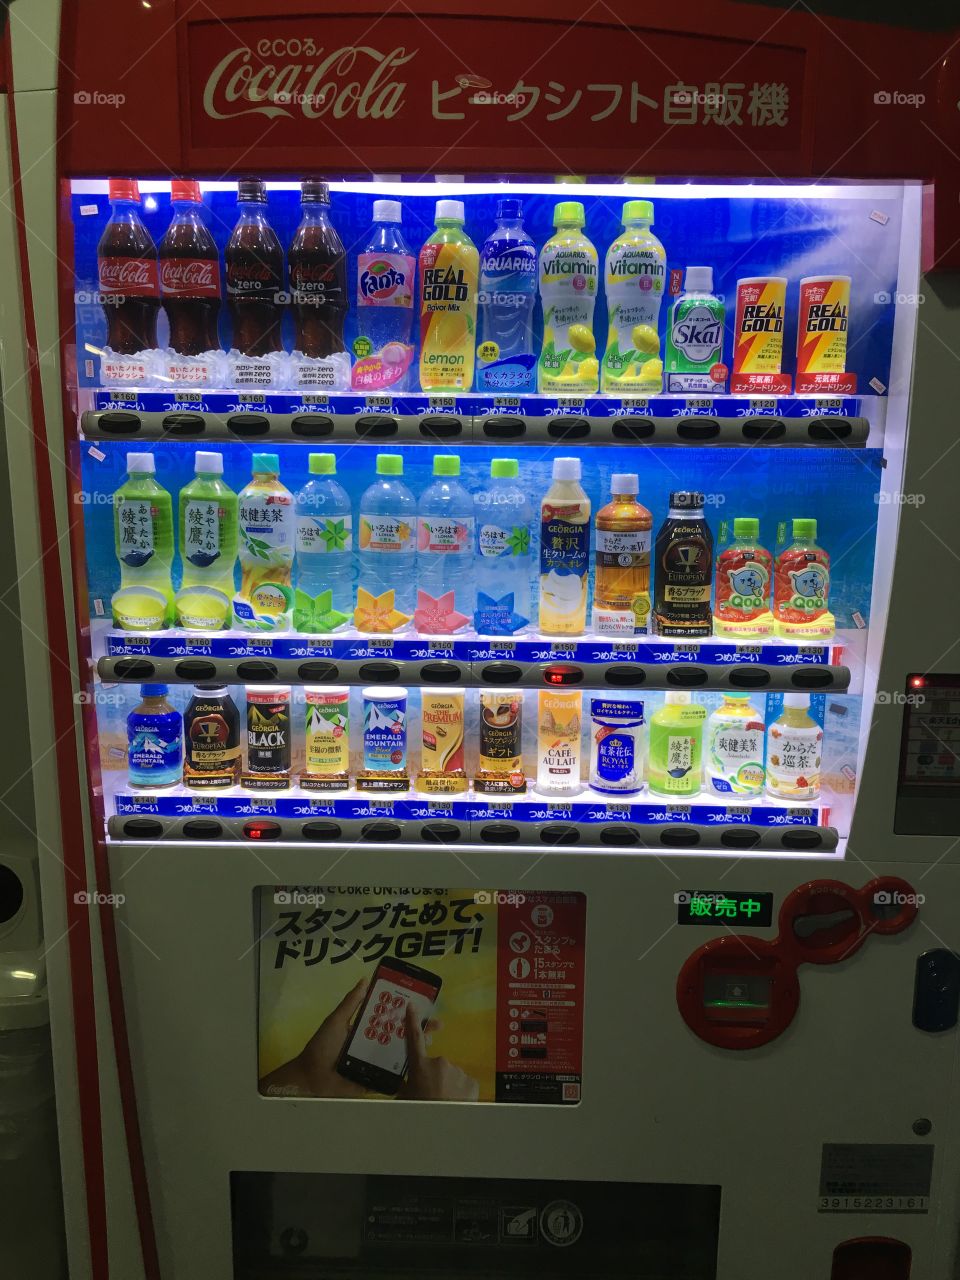 Colorful Vending Machine in Japan